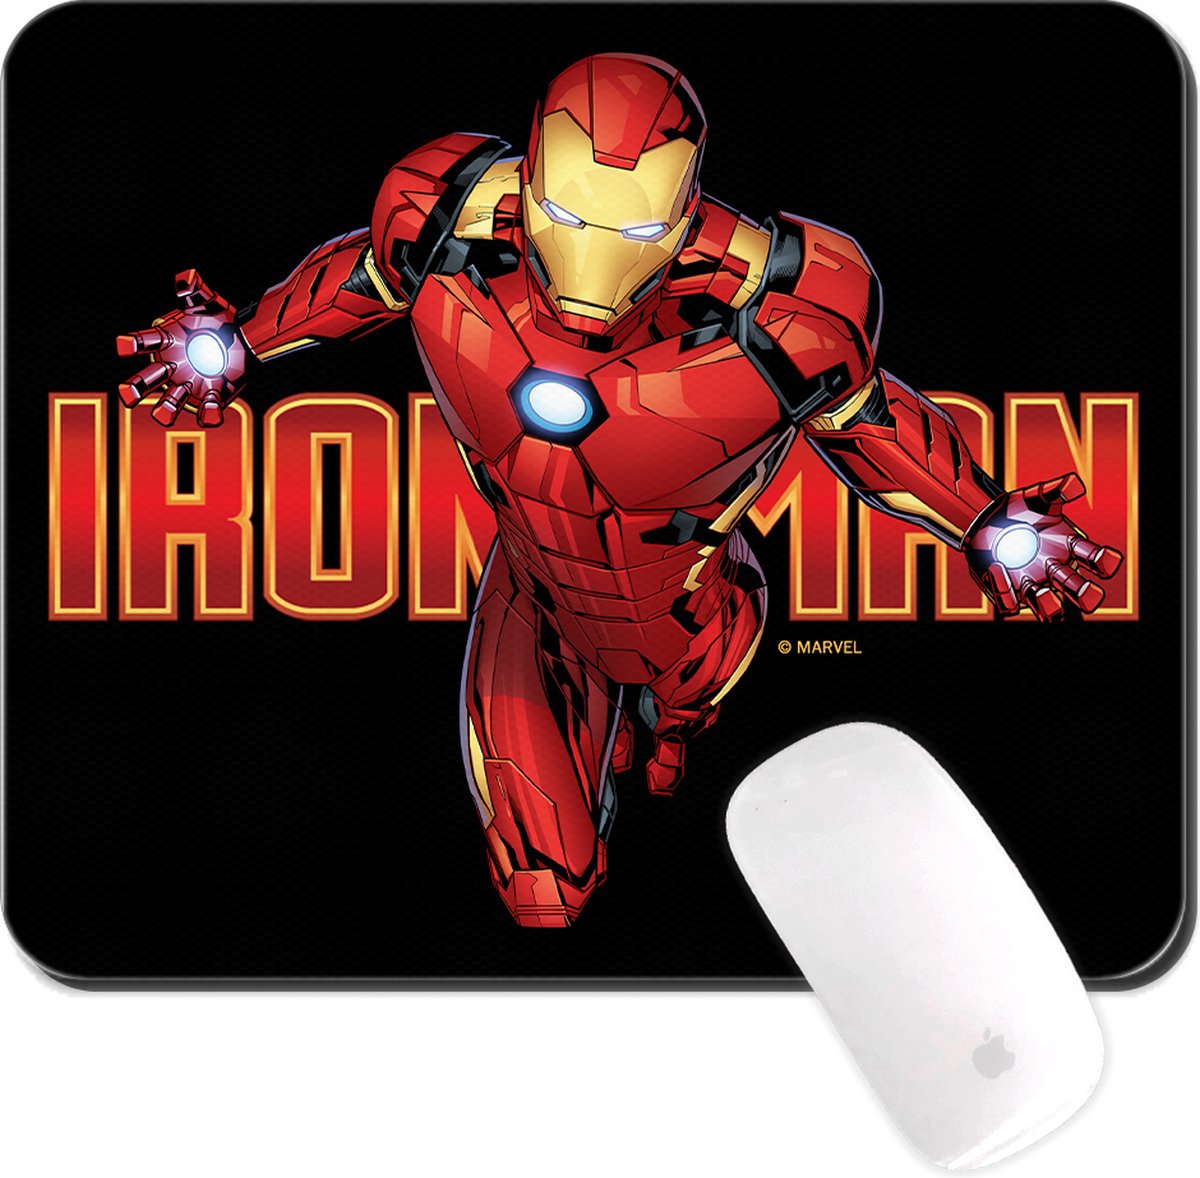 Marvel Iron Man - Muismat 22x18cm 3mm dik